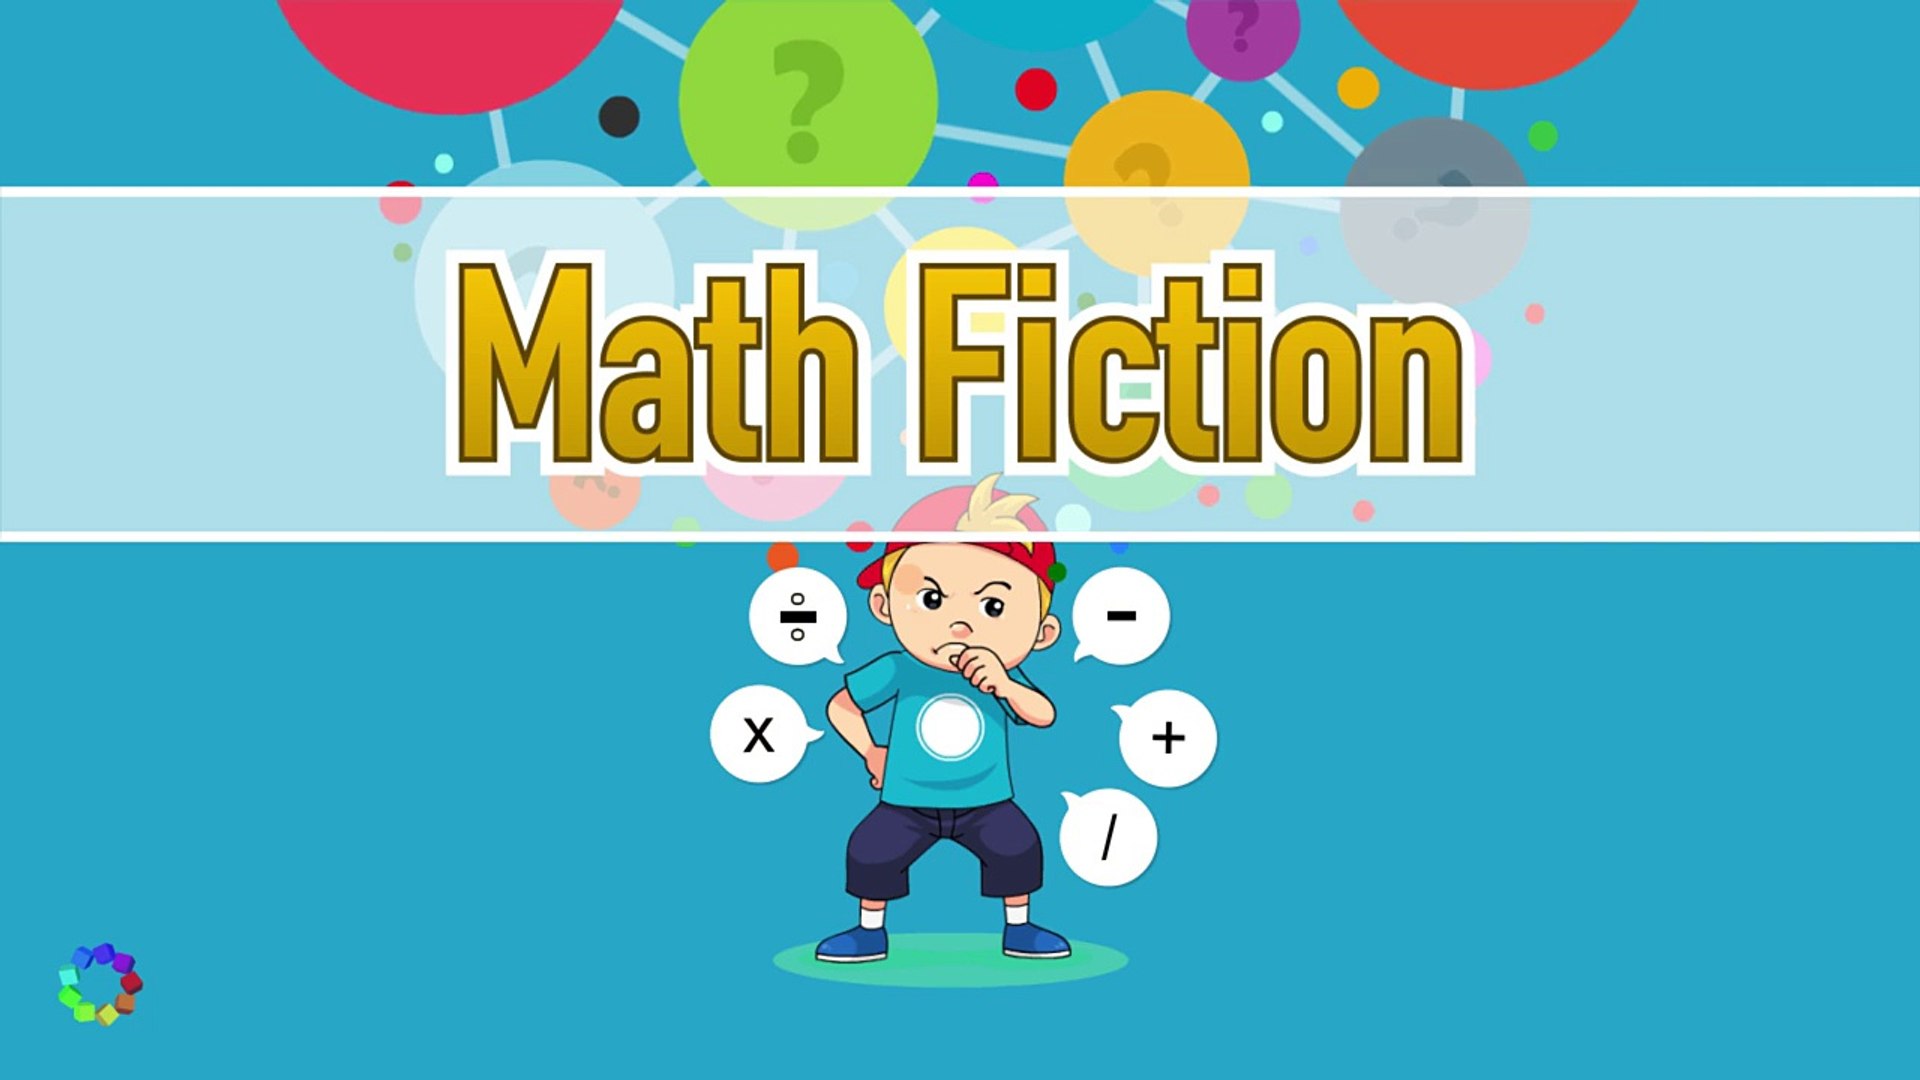 Math Fiction